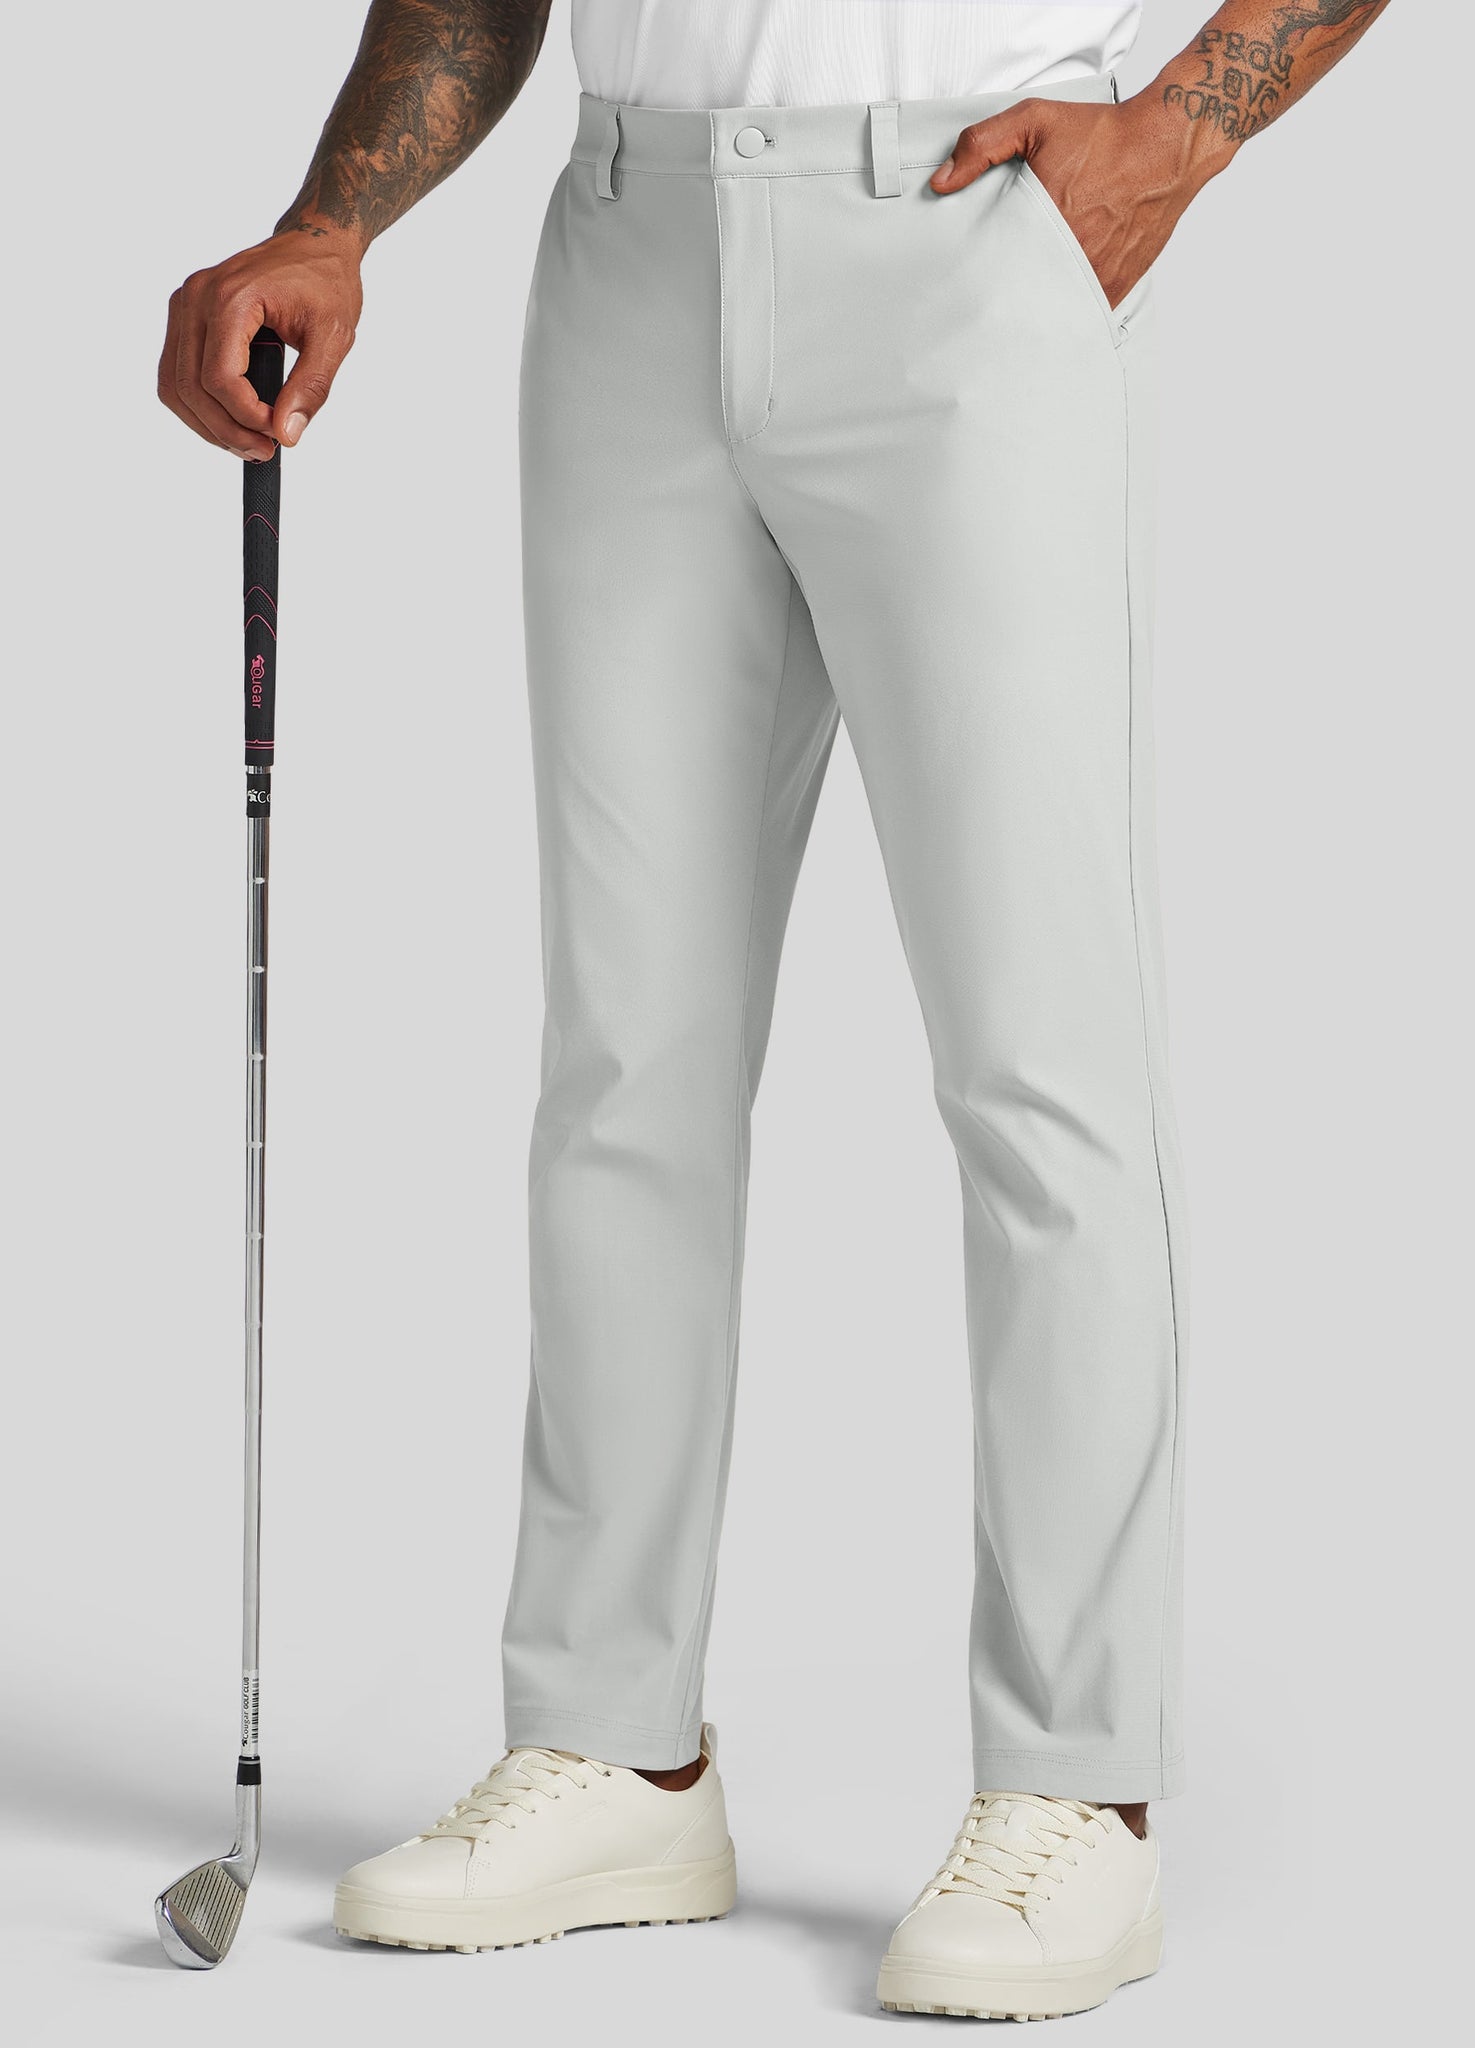 Men's Stretch Golf Pants - Tall